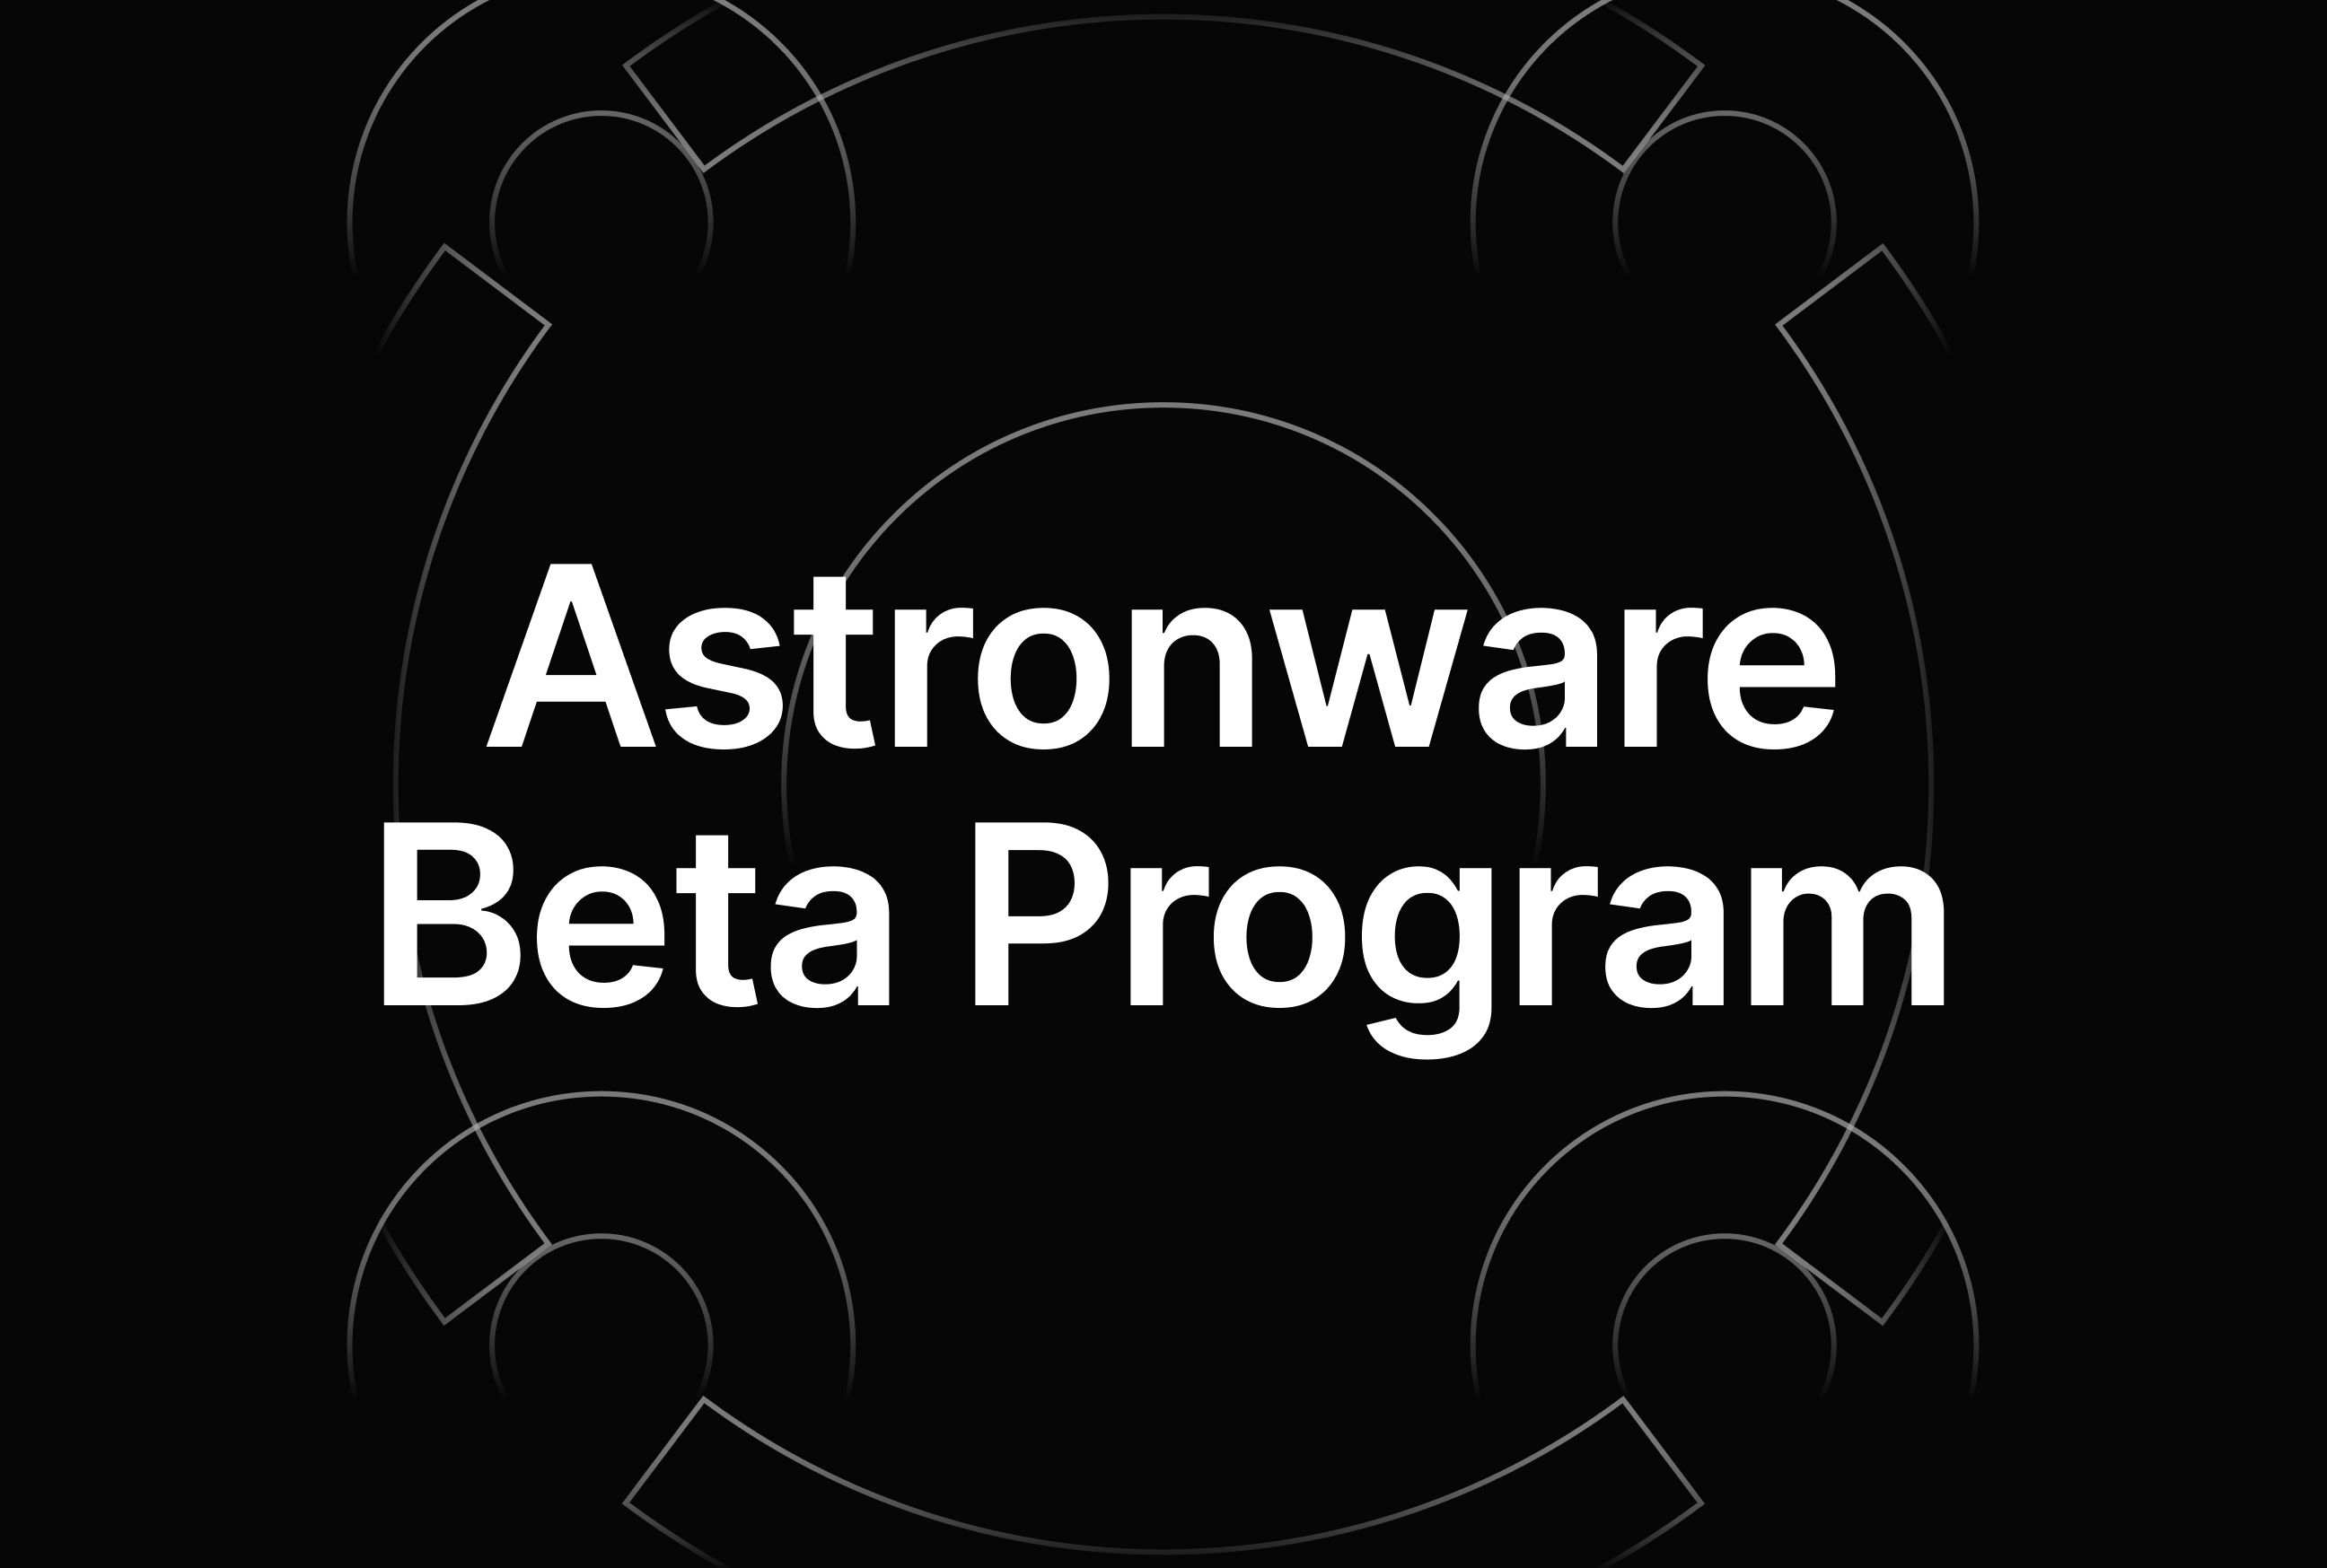 Astronware Beta Program